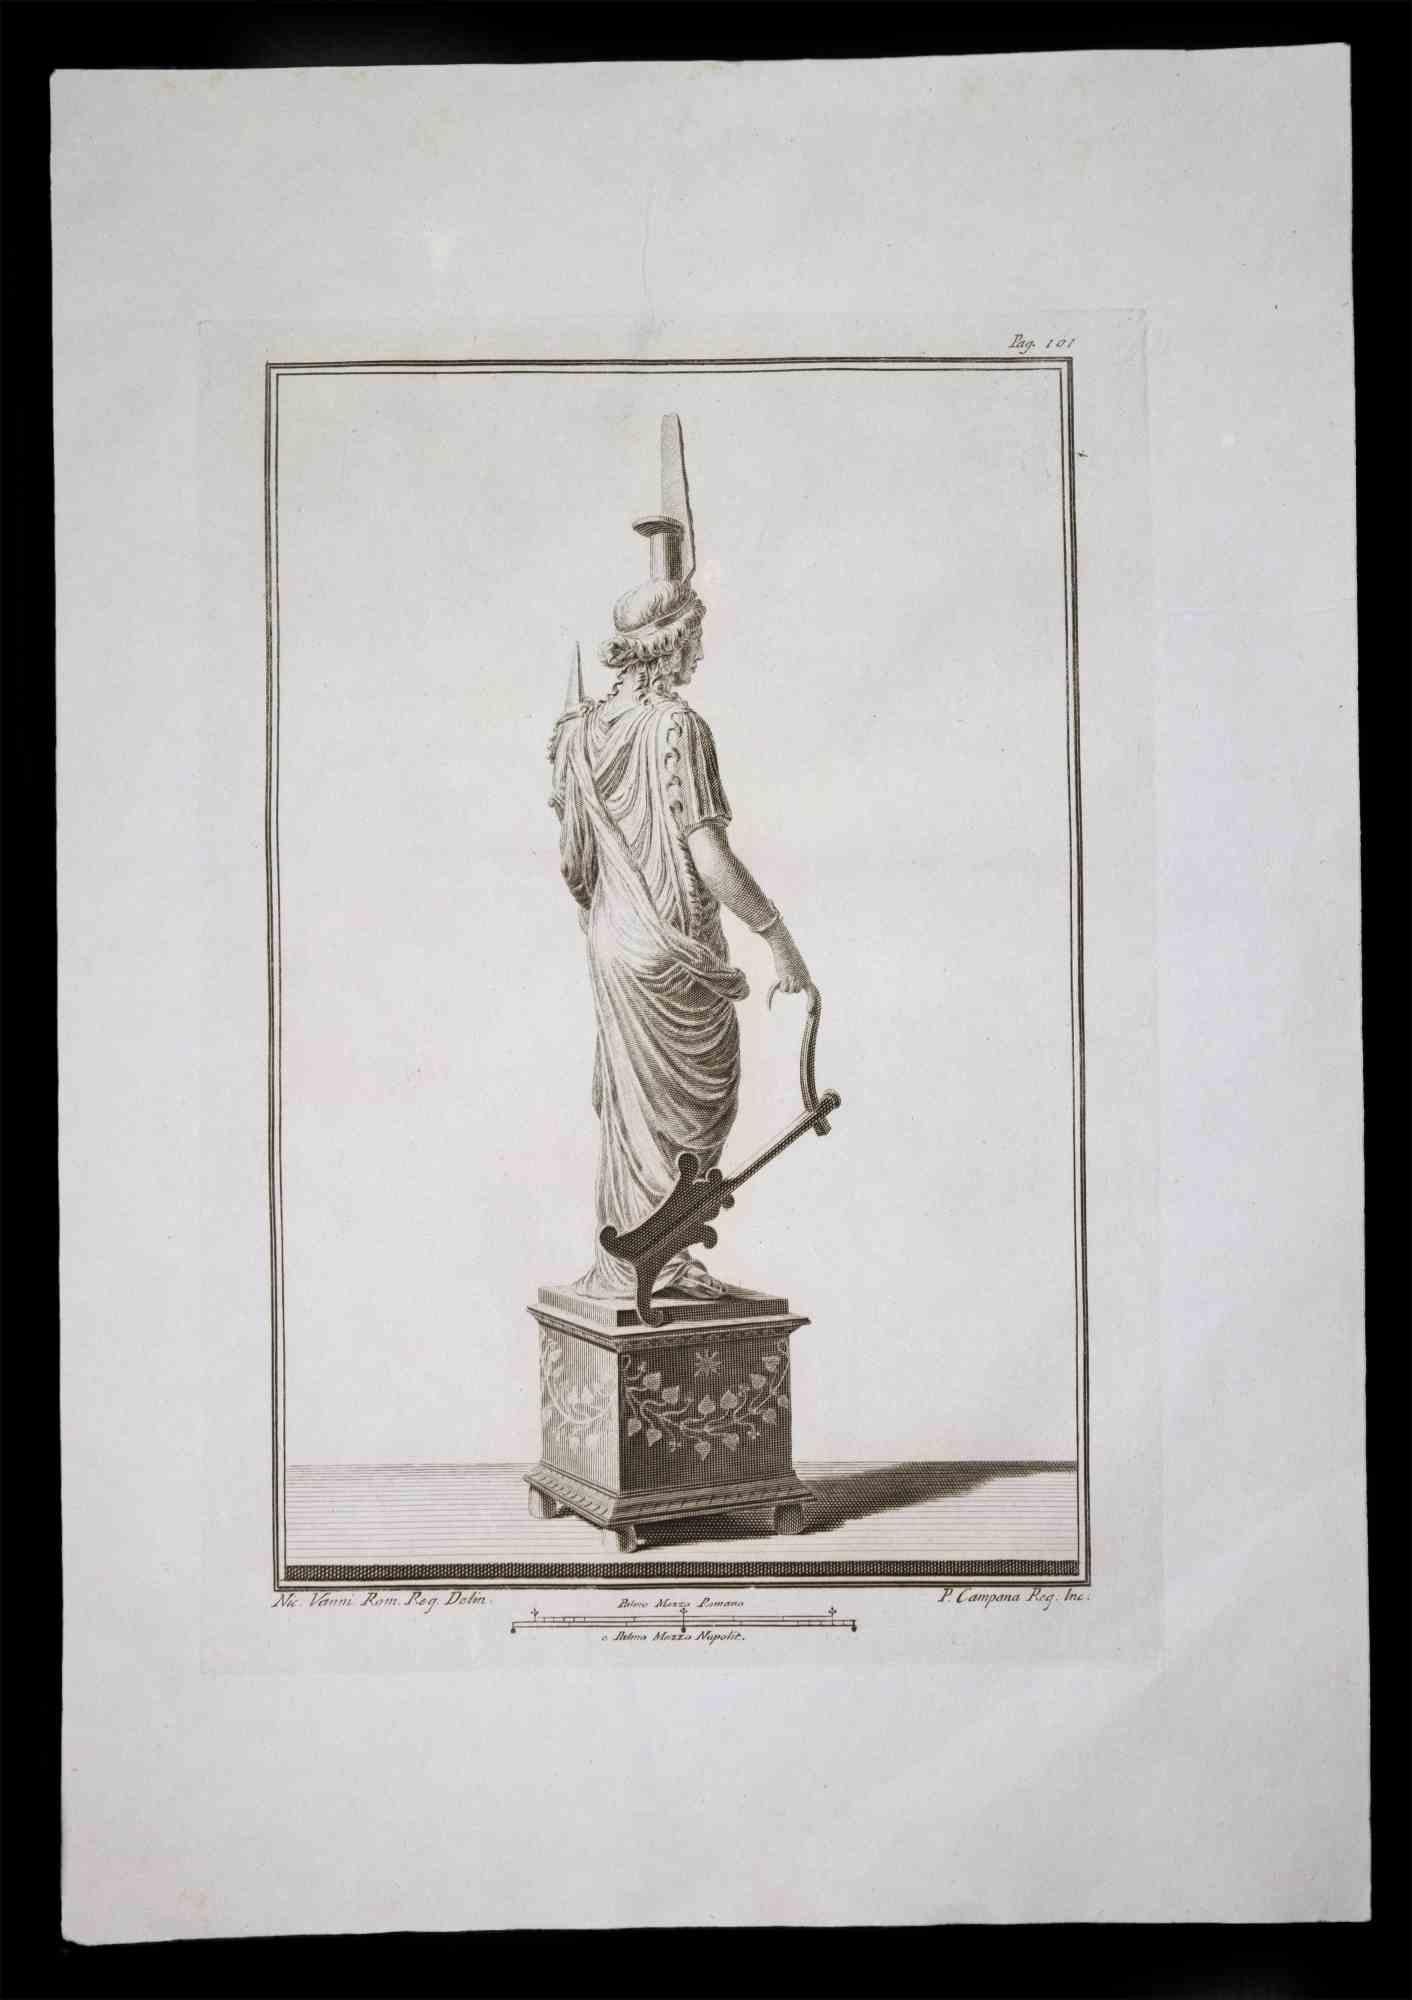 Pietro Campana Figurative Print - Ancient Roman Statue - Original Etching - 18th century